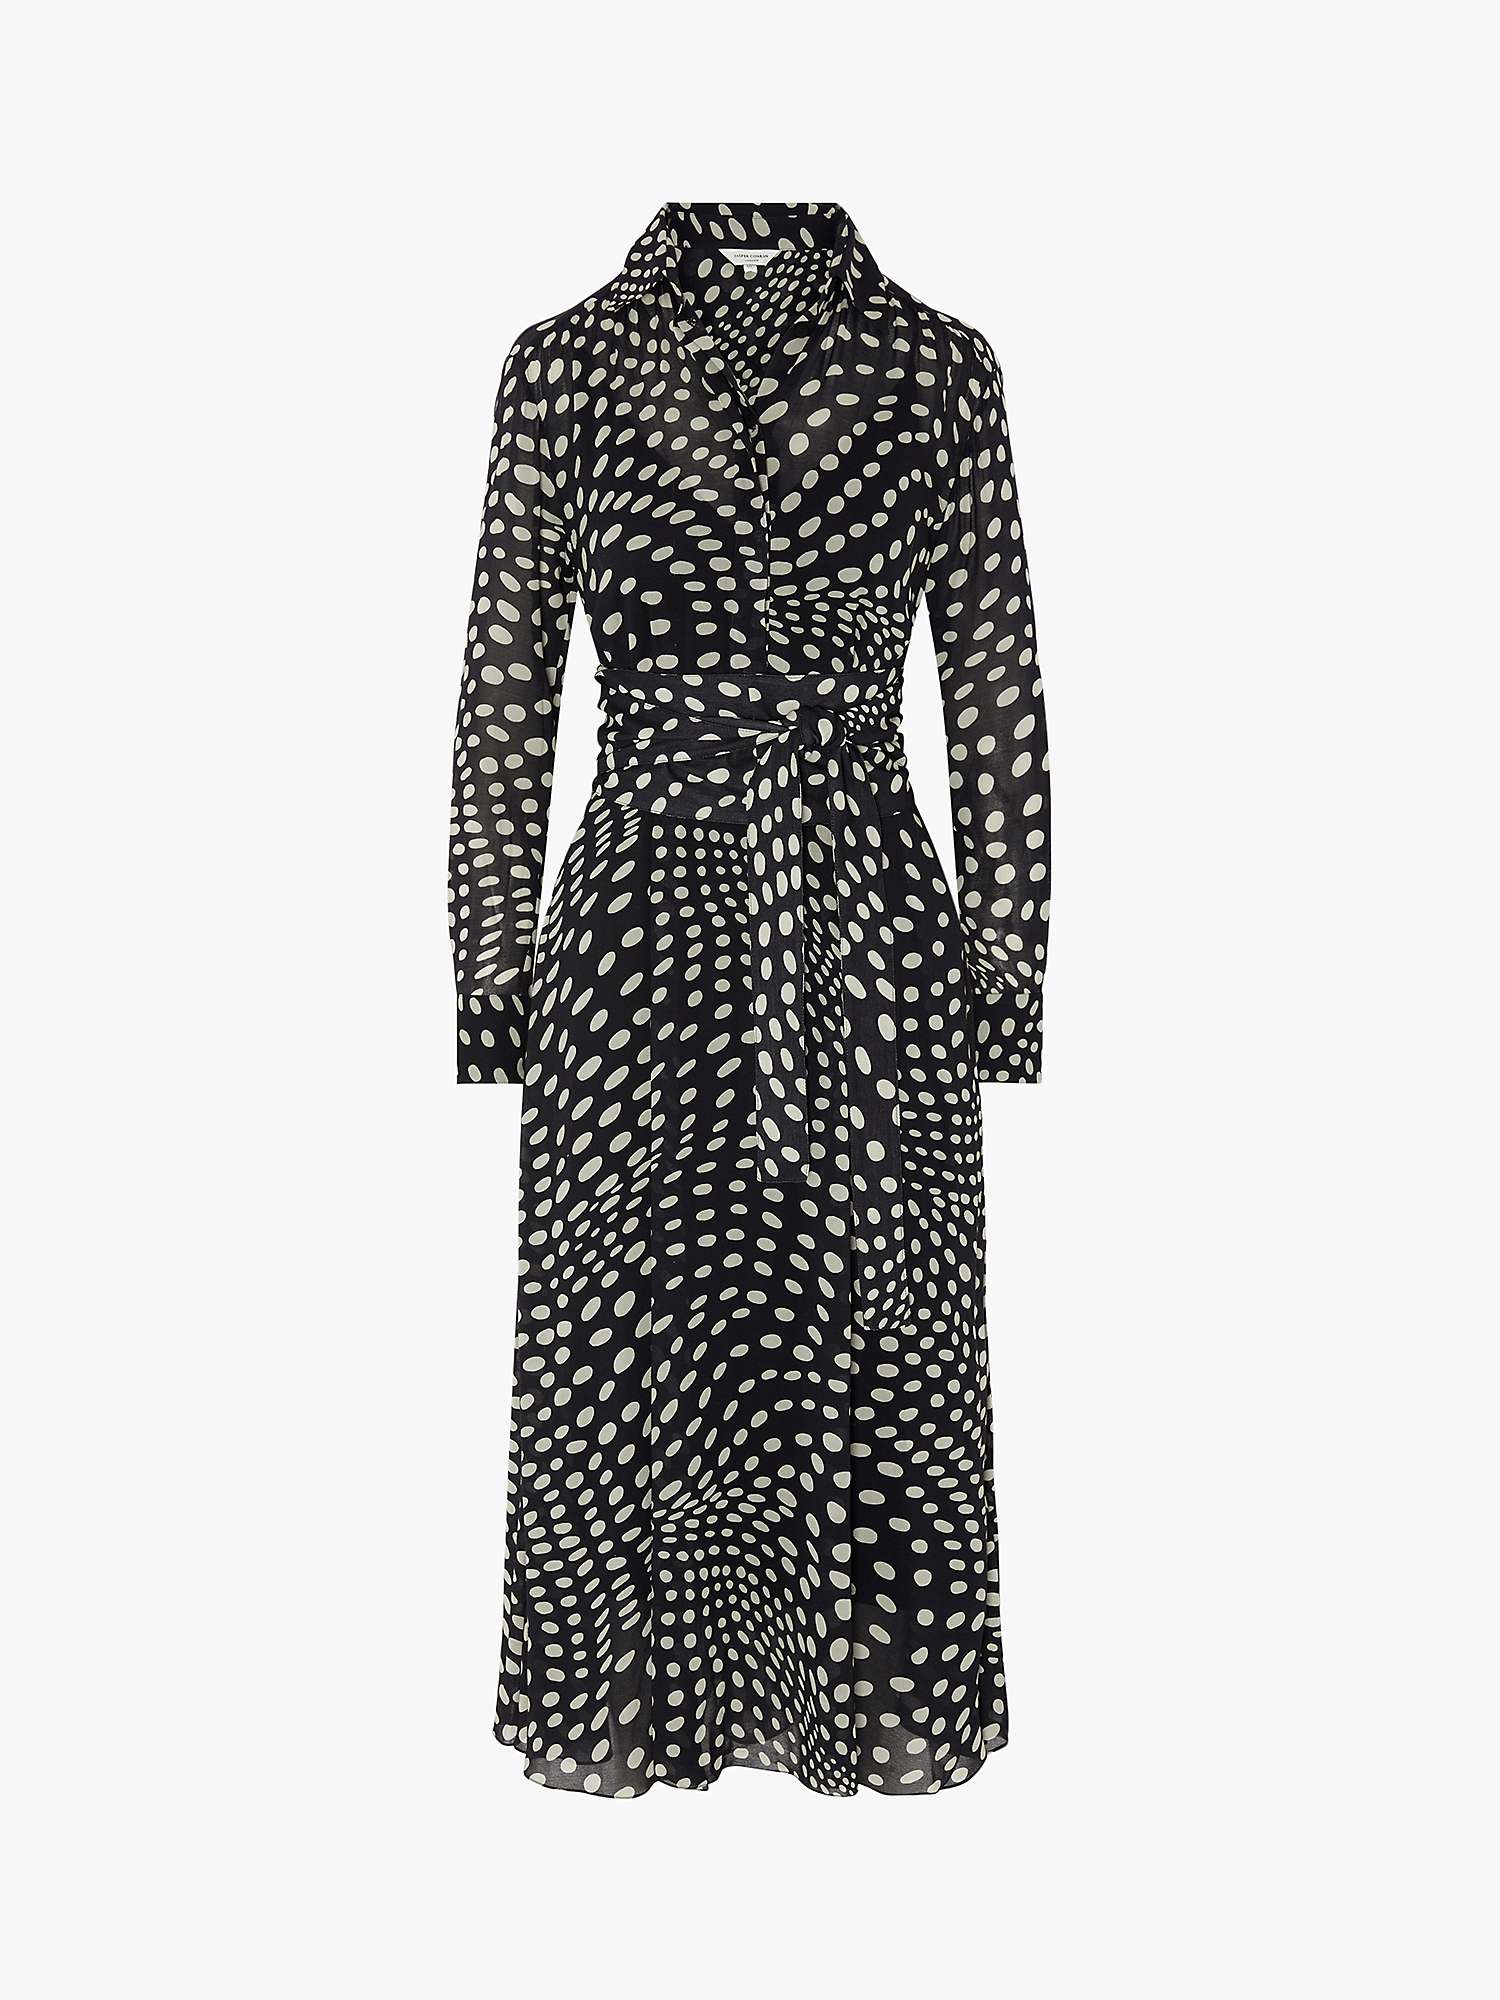 Buy Jasper Conran London Chloe Spot Print Midi Shirt Dress, Black/White Online at johnlewis.com